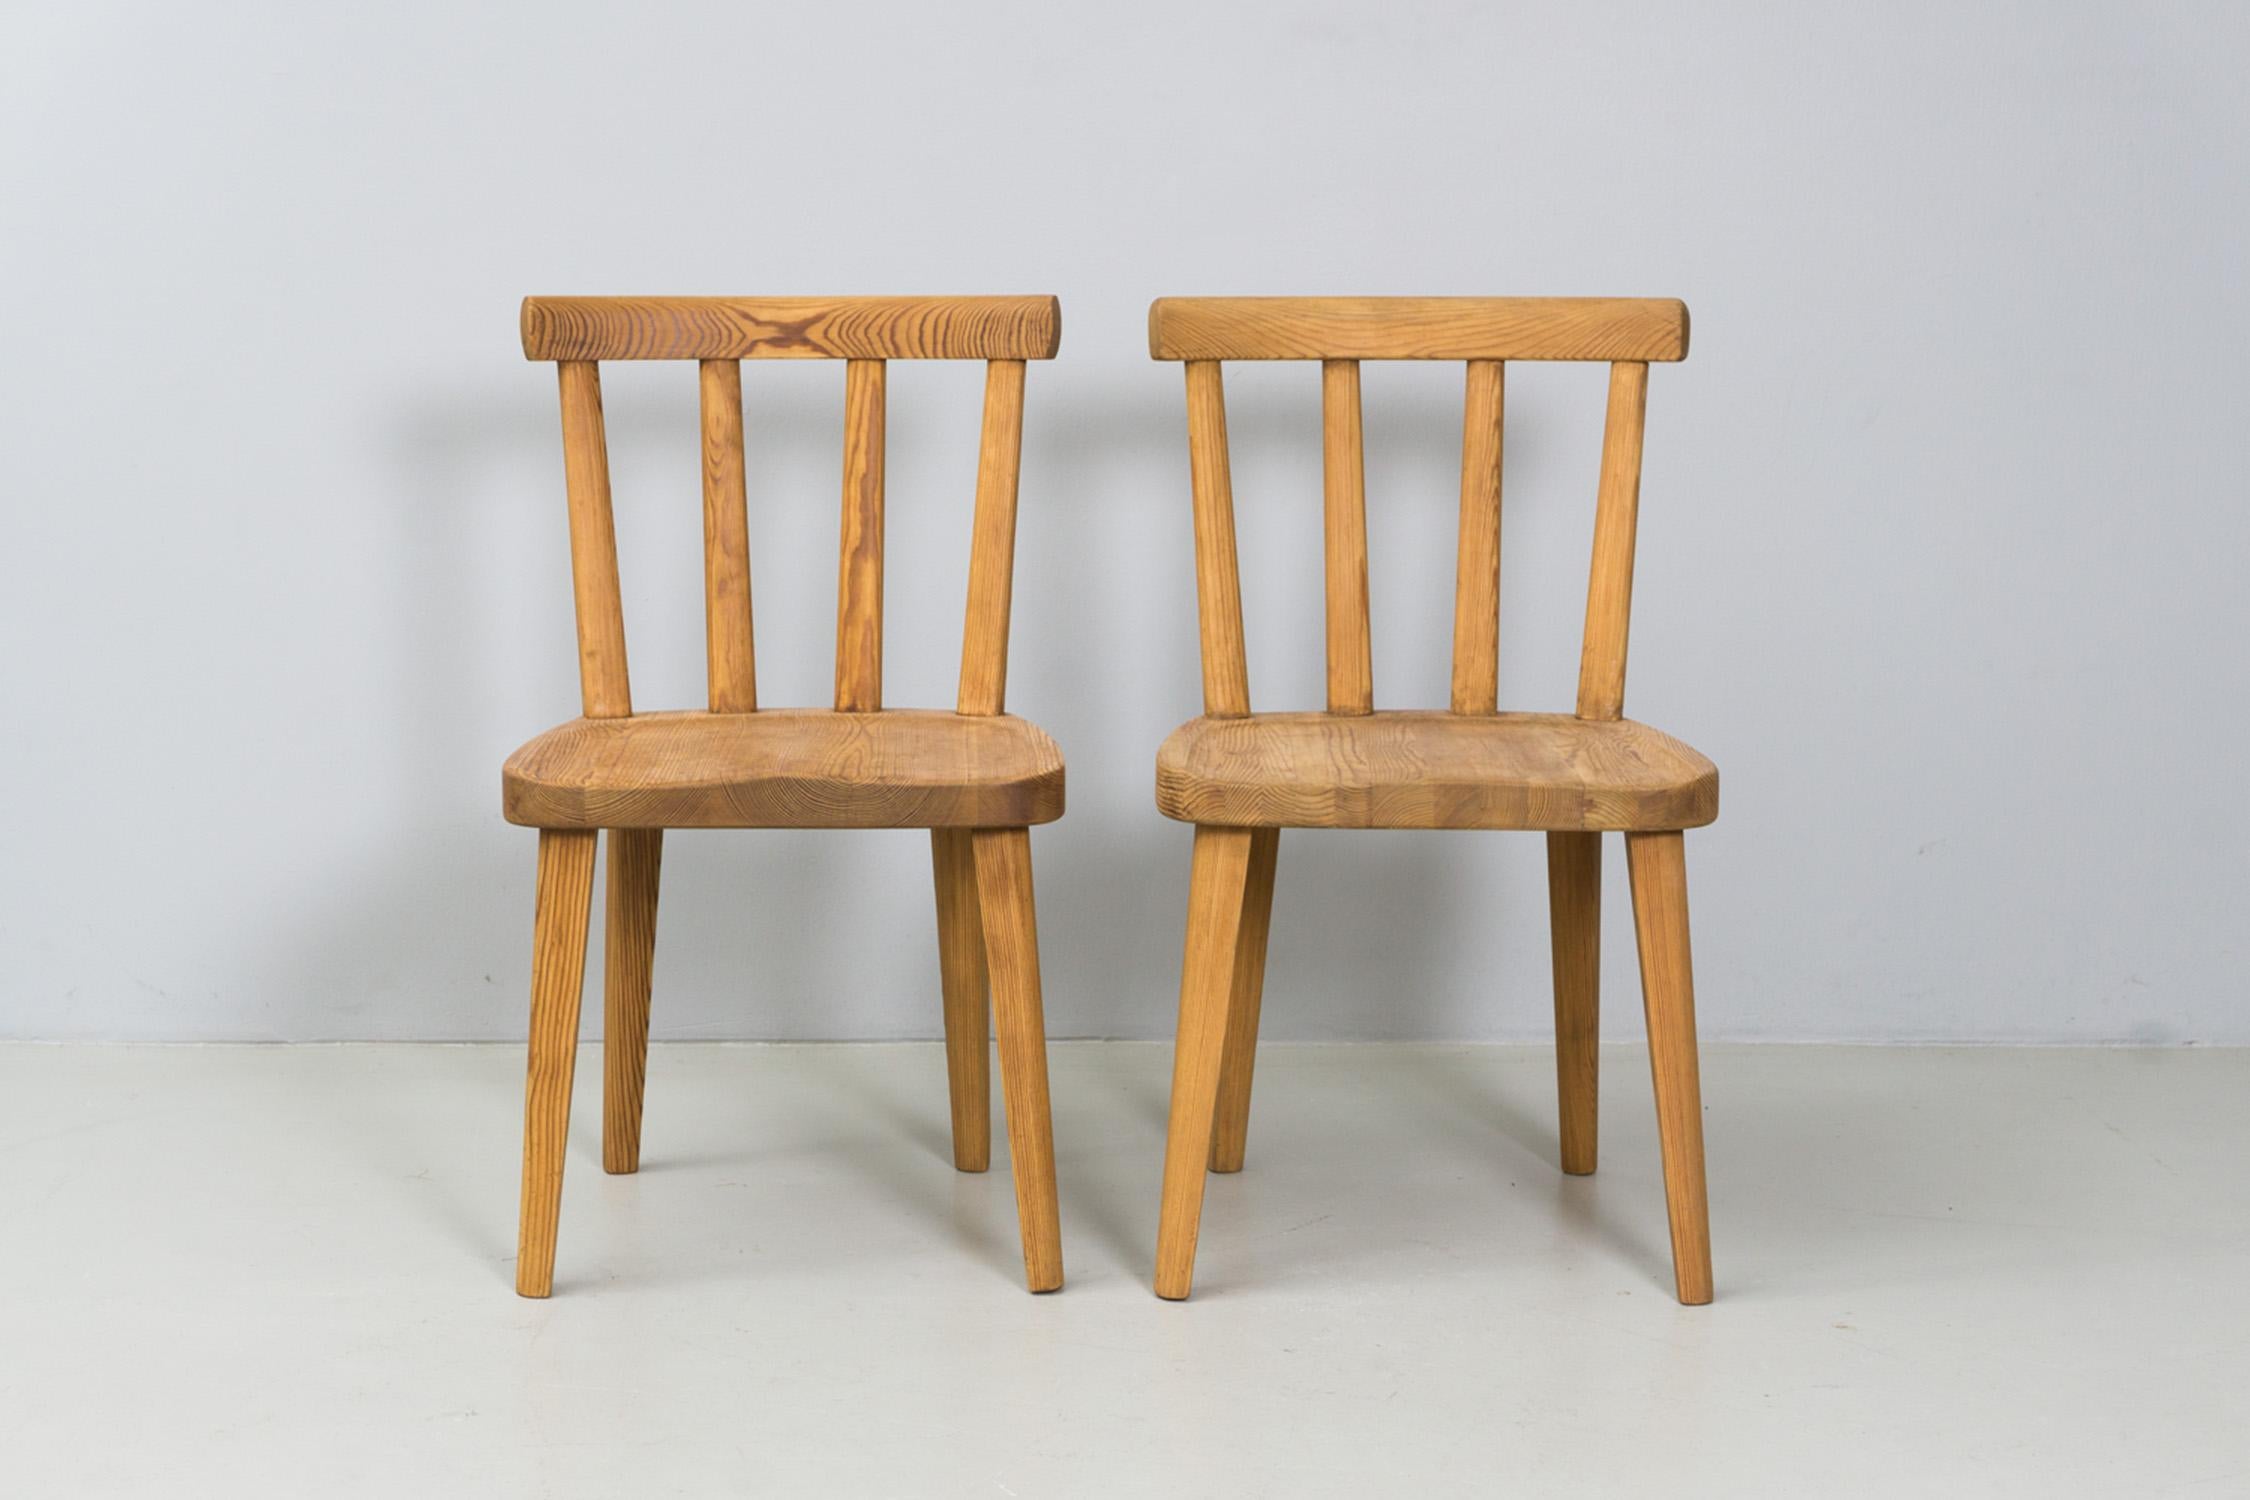 Modern Set of Swedish Pine Wood Chairs, 'Uto' by Axel Einar Hjorth, 1930